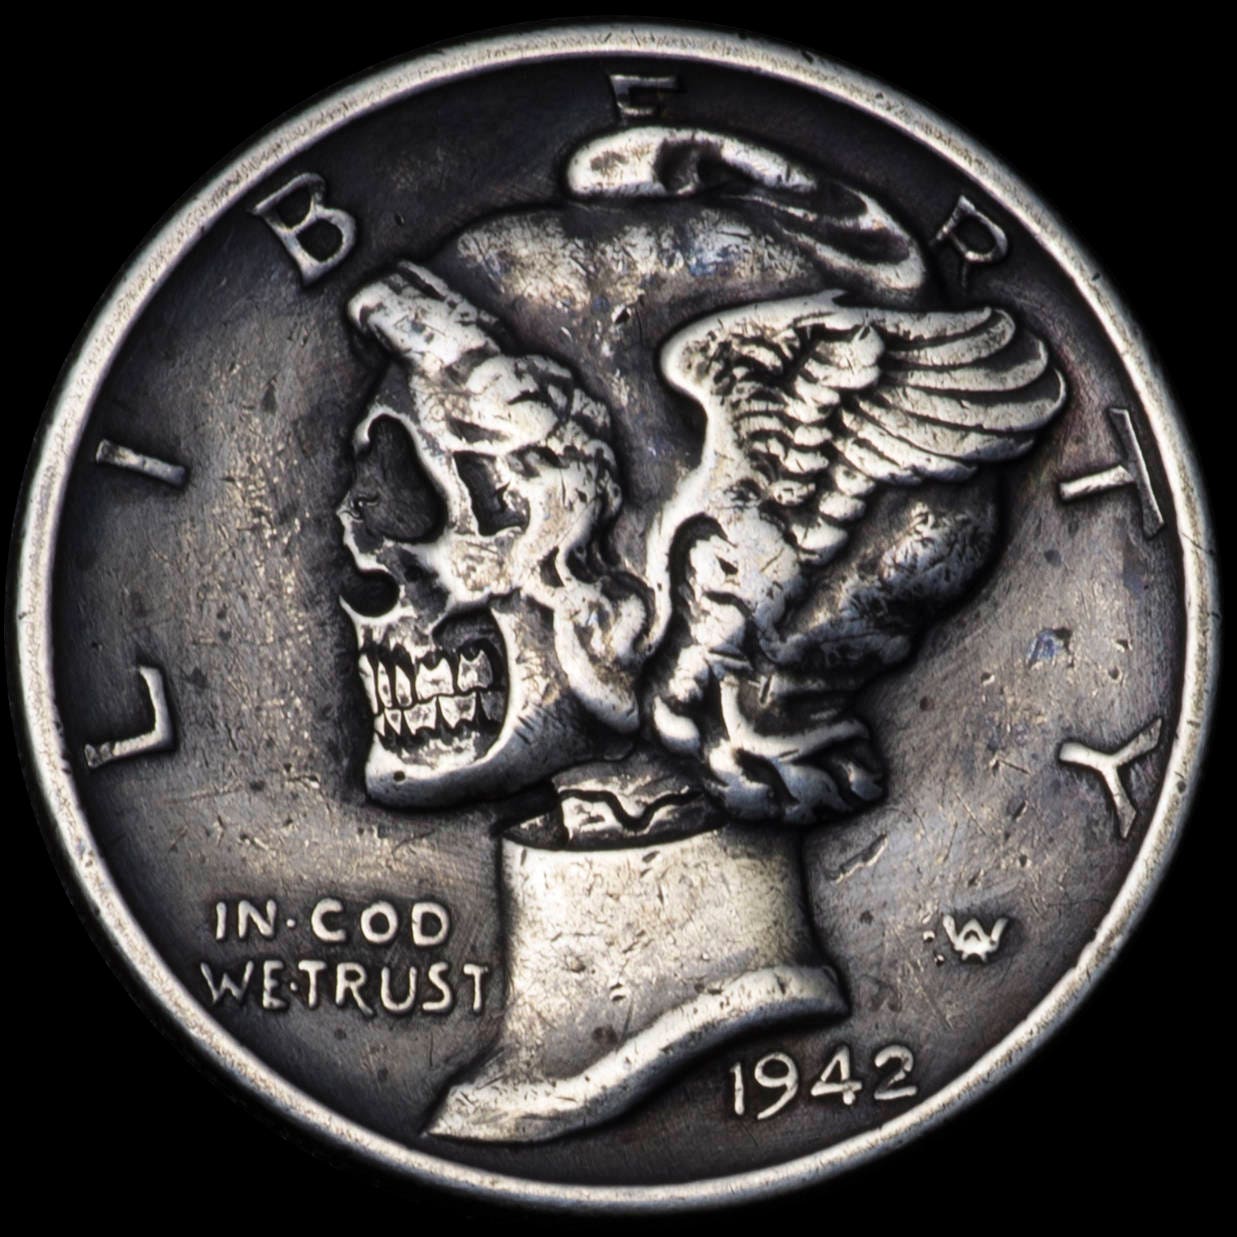 Original Hand Carved Buffalo Nickel SKULL Hobo Nickel Coin by Seth Basista  SB Carvings Human Engraved Sculpted 